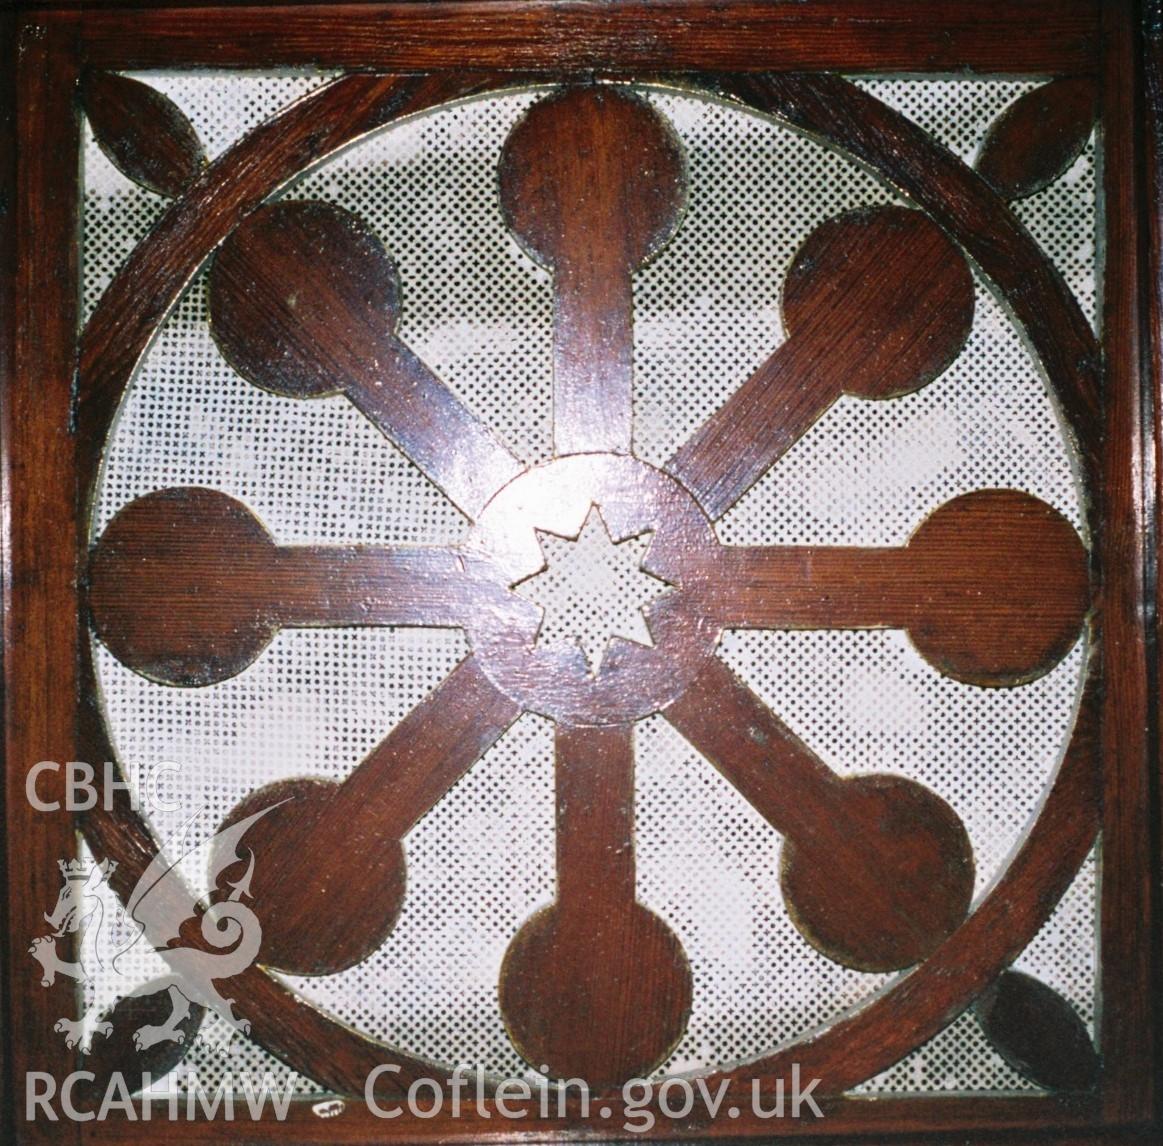 Digital colour photograph showing Salem Newydd chapel - ventilation panel in ceiling.